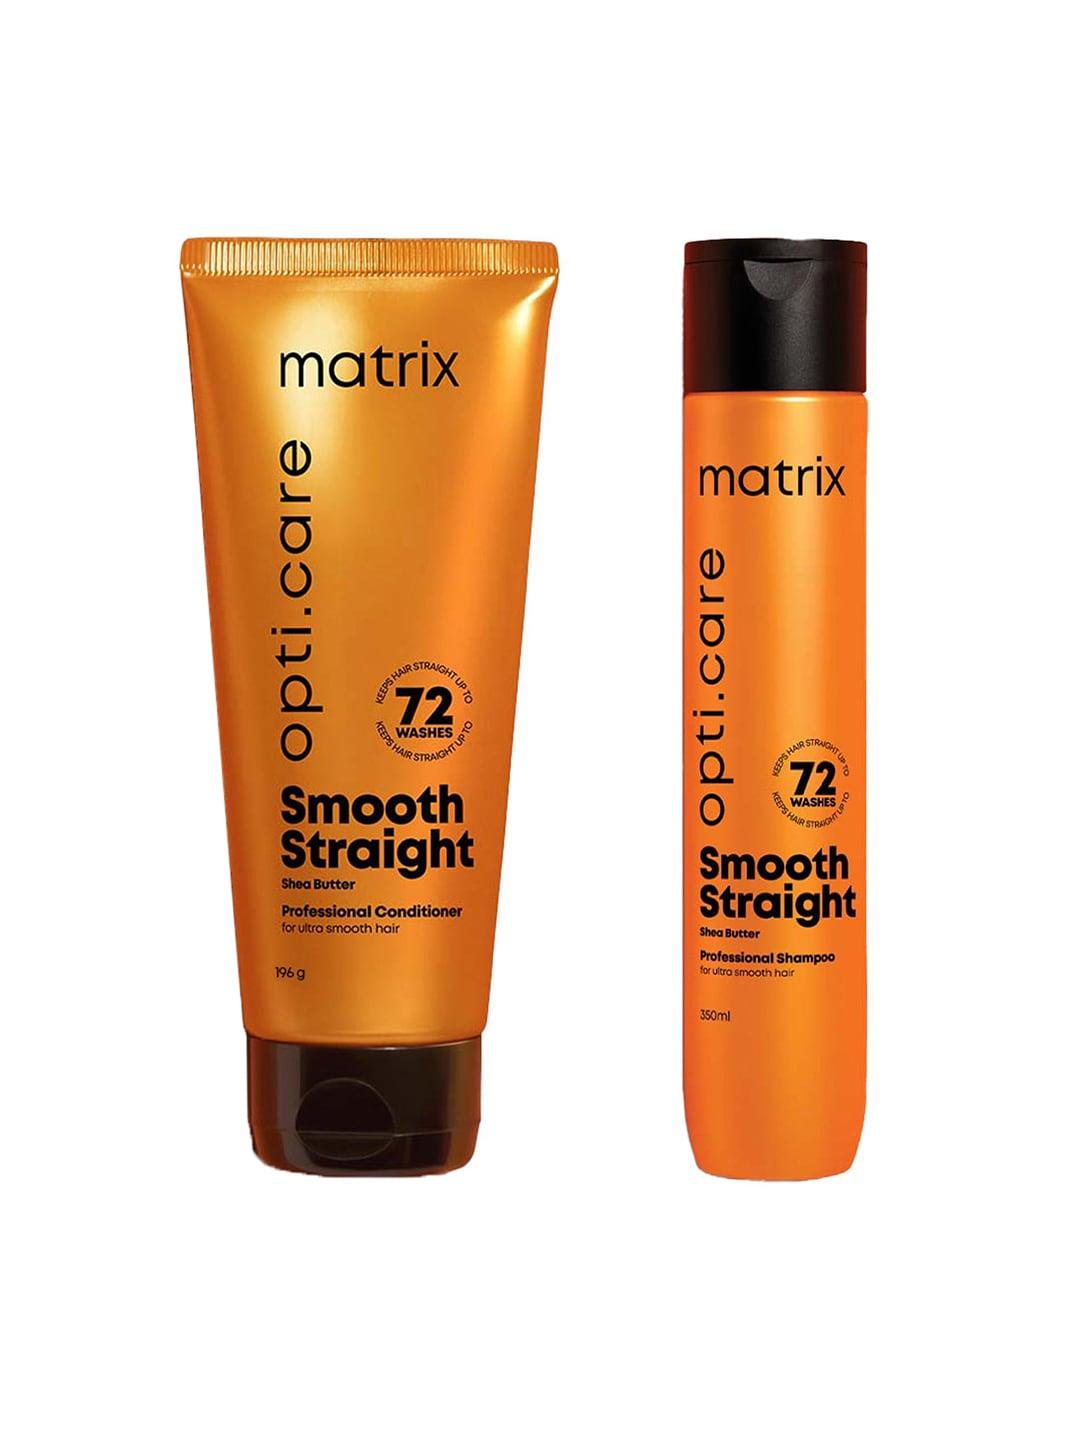 matrix-opti-care-smooth-straight-professional-shampoo-350ml-&-conditioner-196g